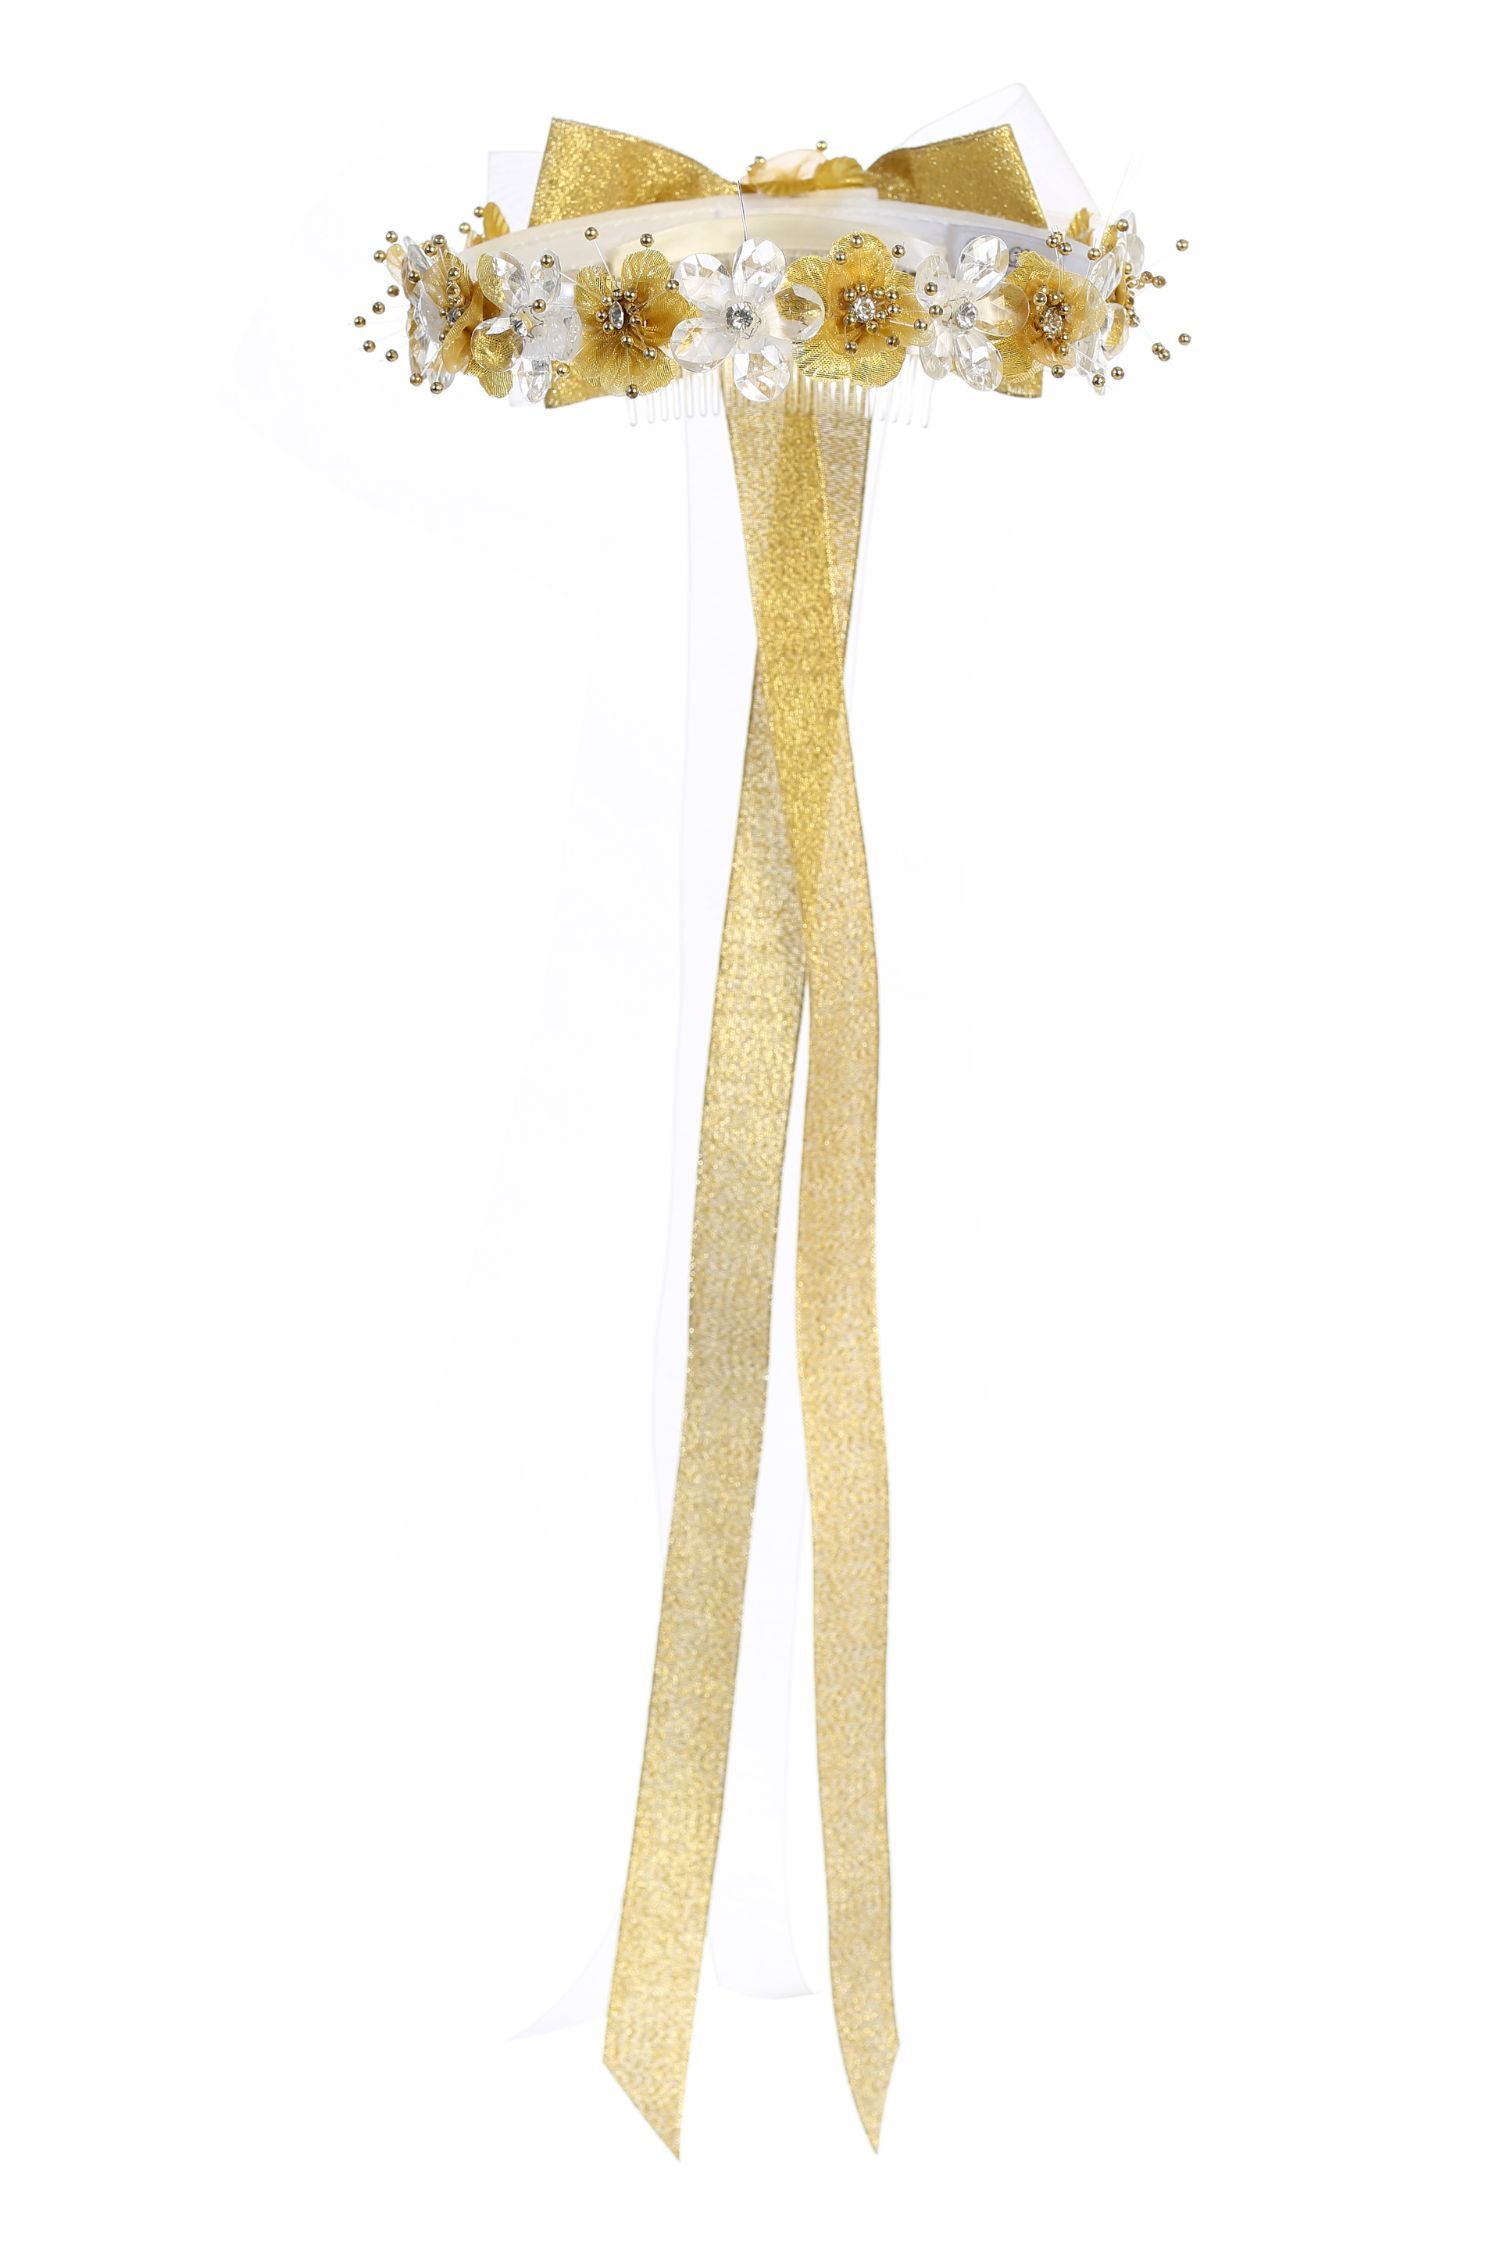 Accessories - Rhinestone Crystal Flower Crown